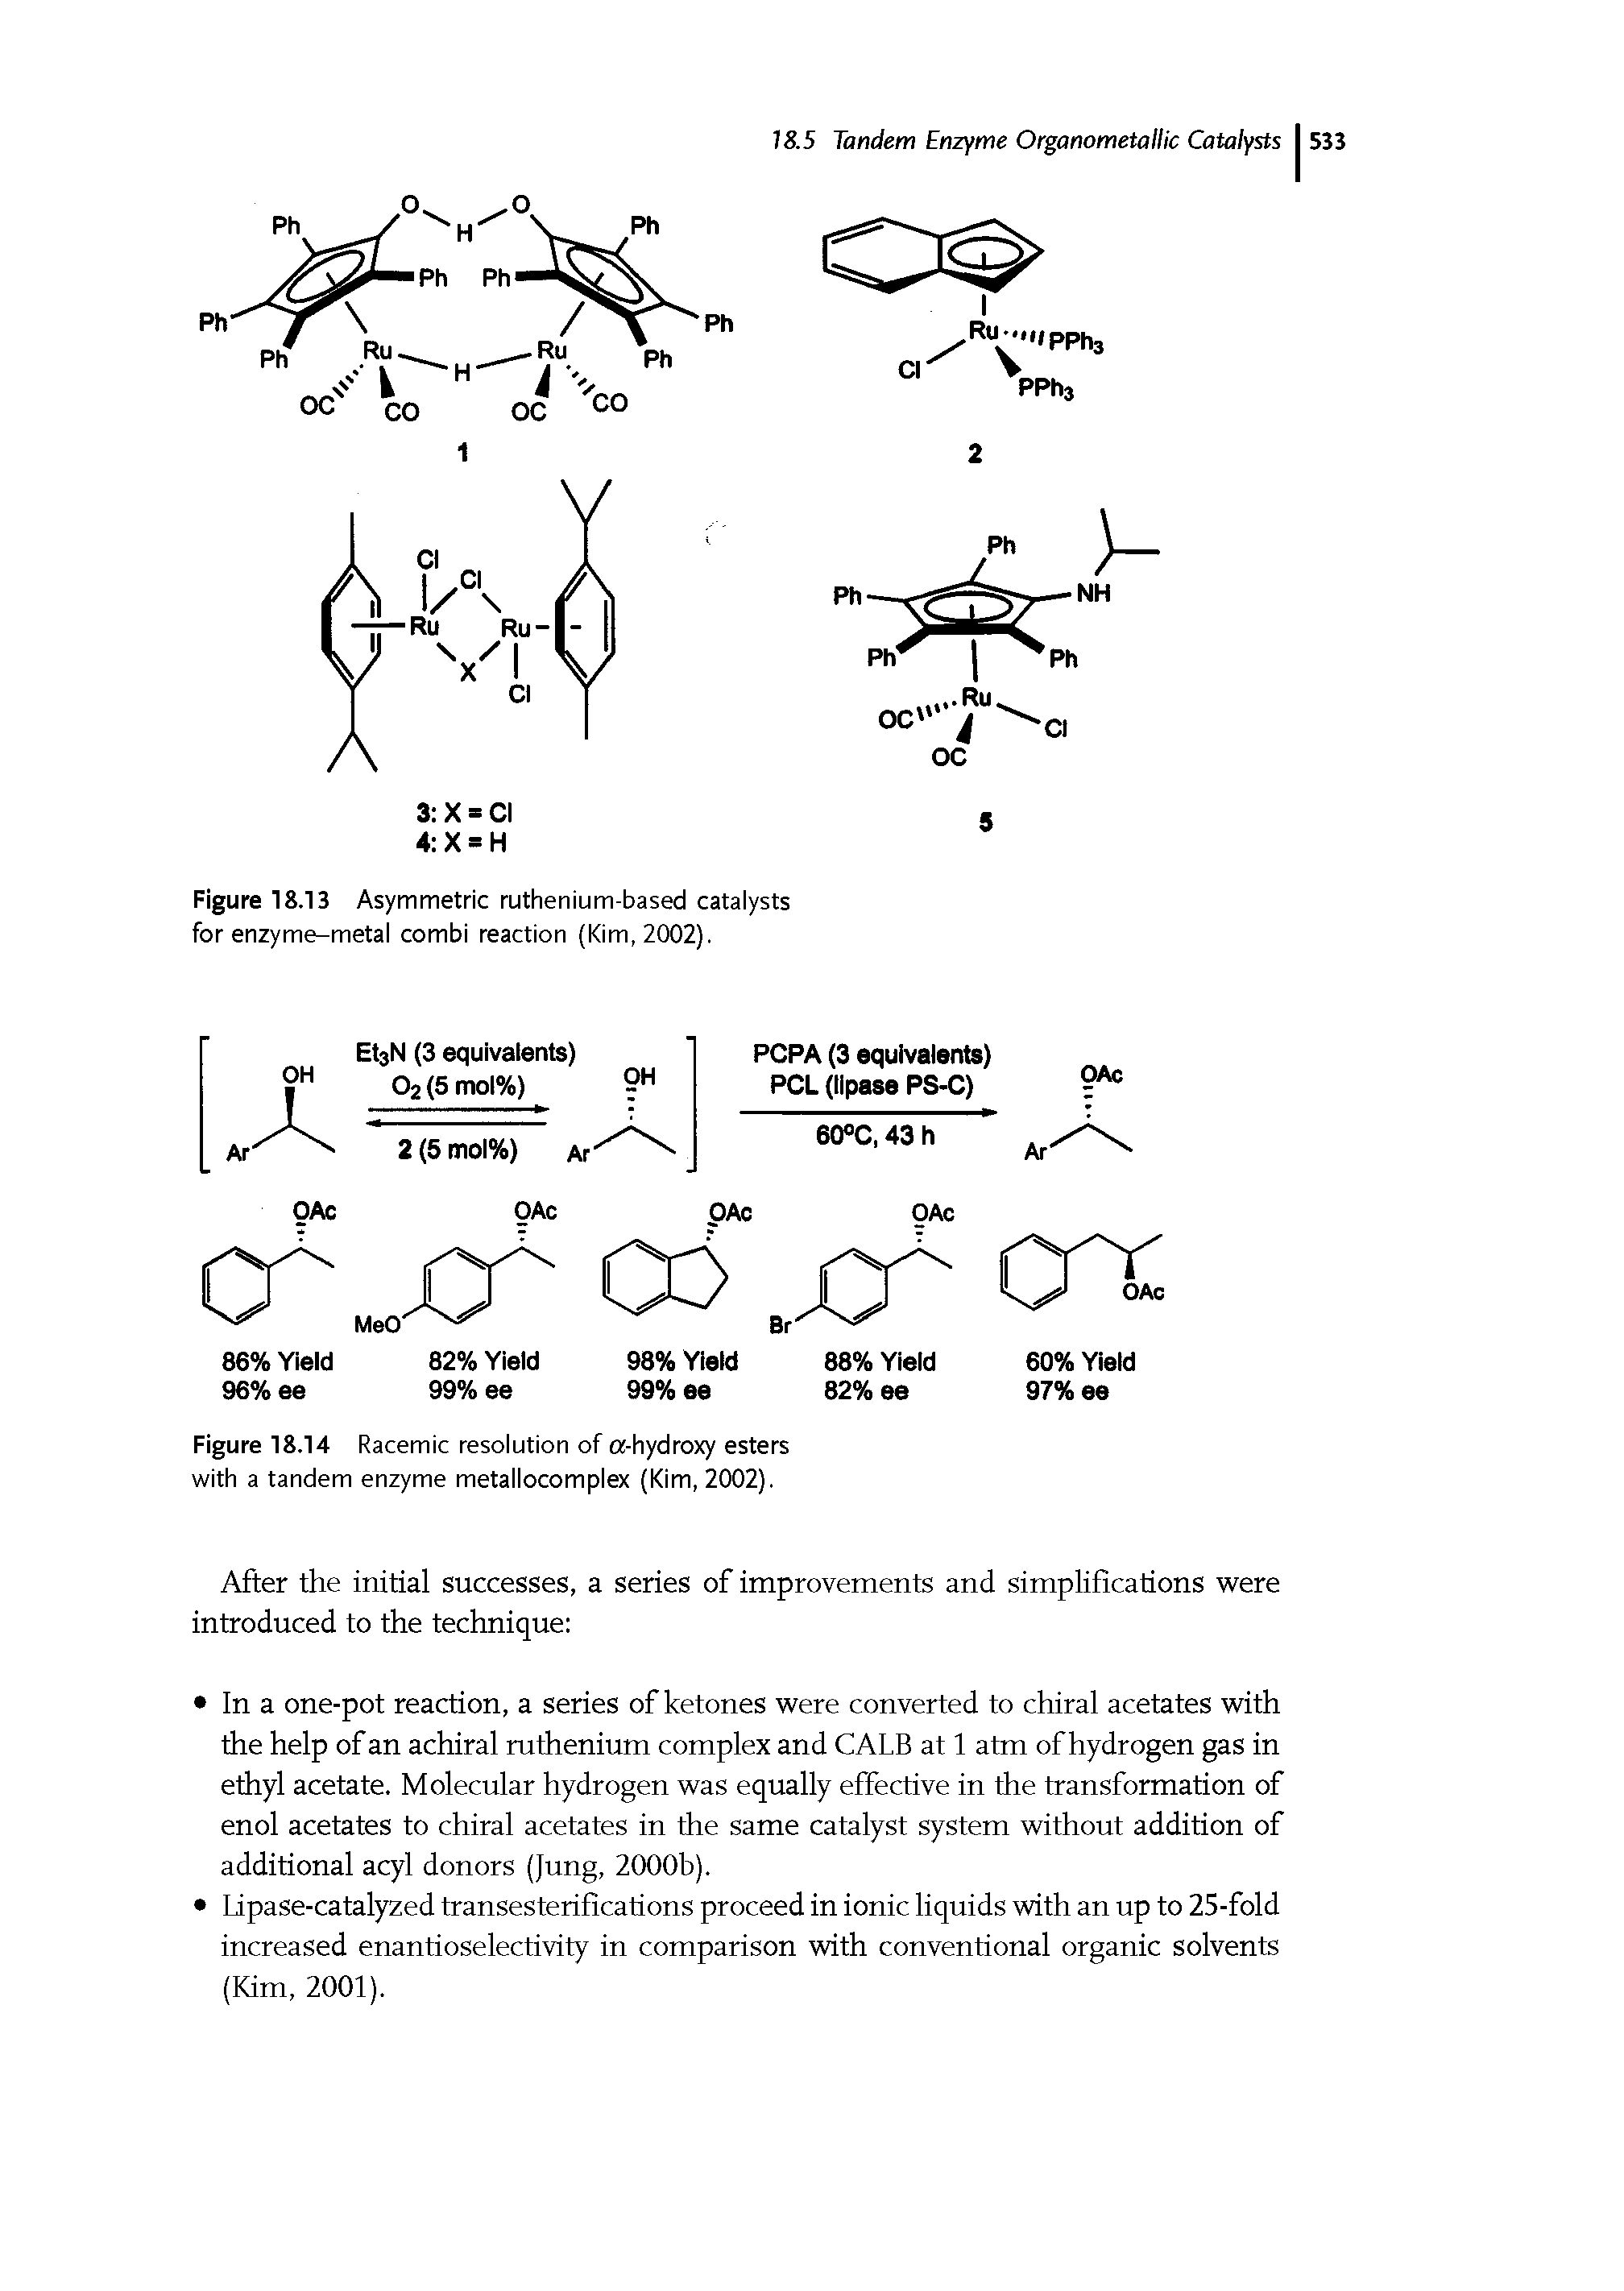 Figure 18.13 Asymmetric ruthenium-based catalysts for enzyme-metal combi reaction (Kim, 2002).